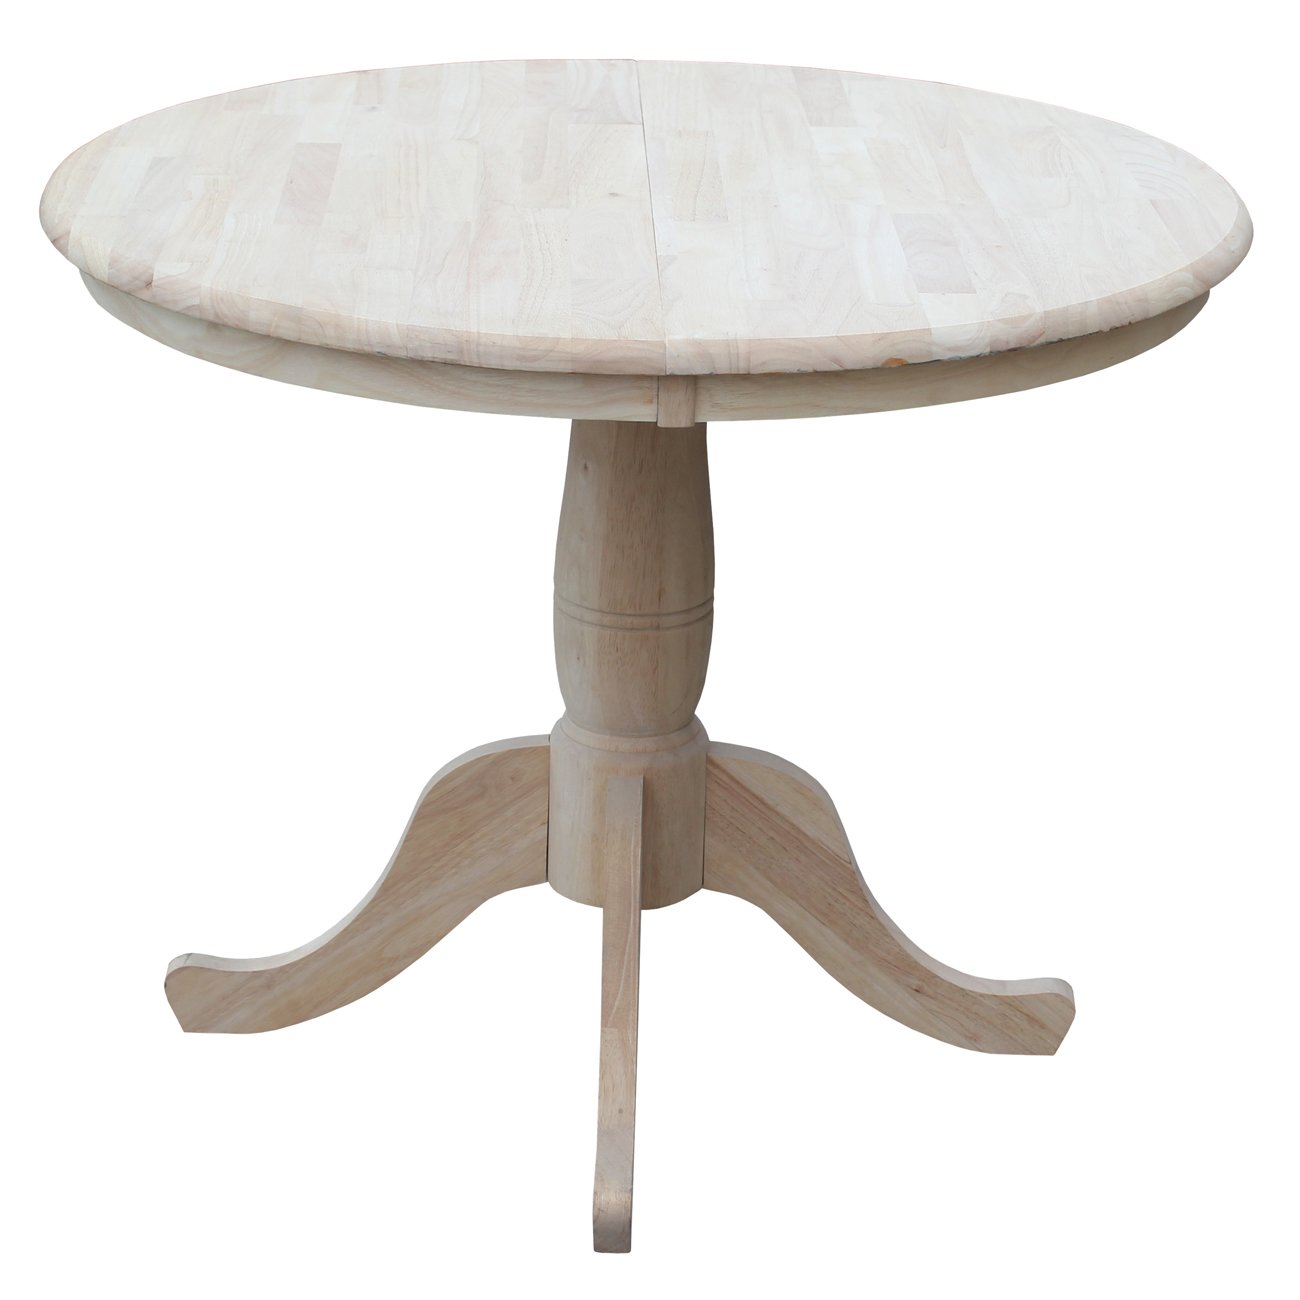 Stylish Lark Manoru0026trade; Overbay Round Pedestal 30 Extendable Dining Table round pedestal dining table